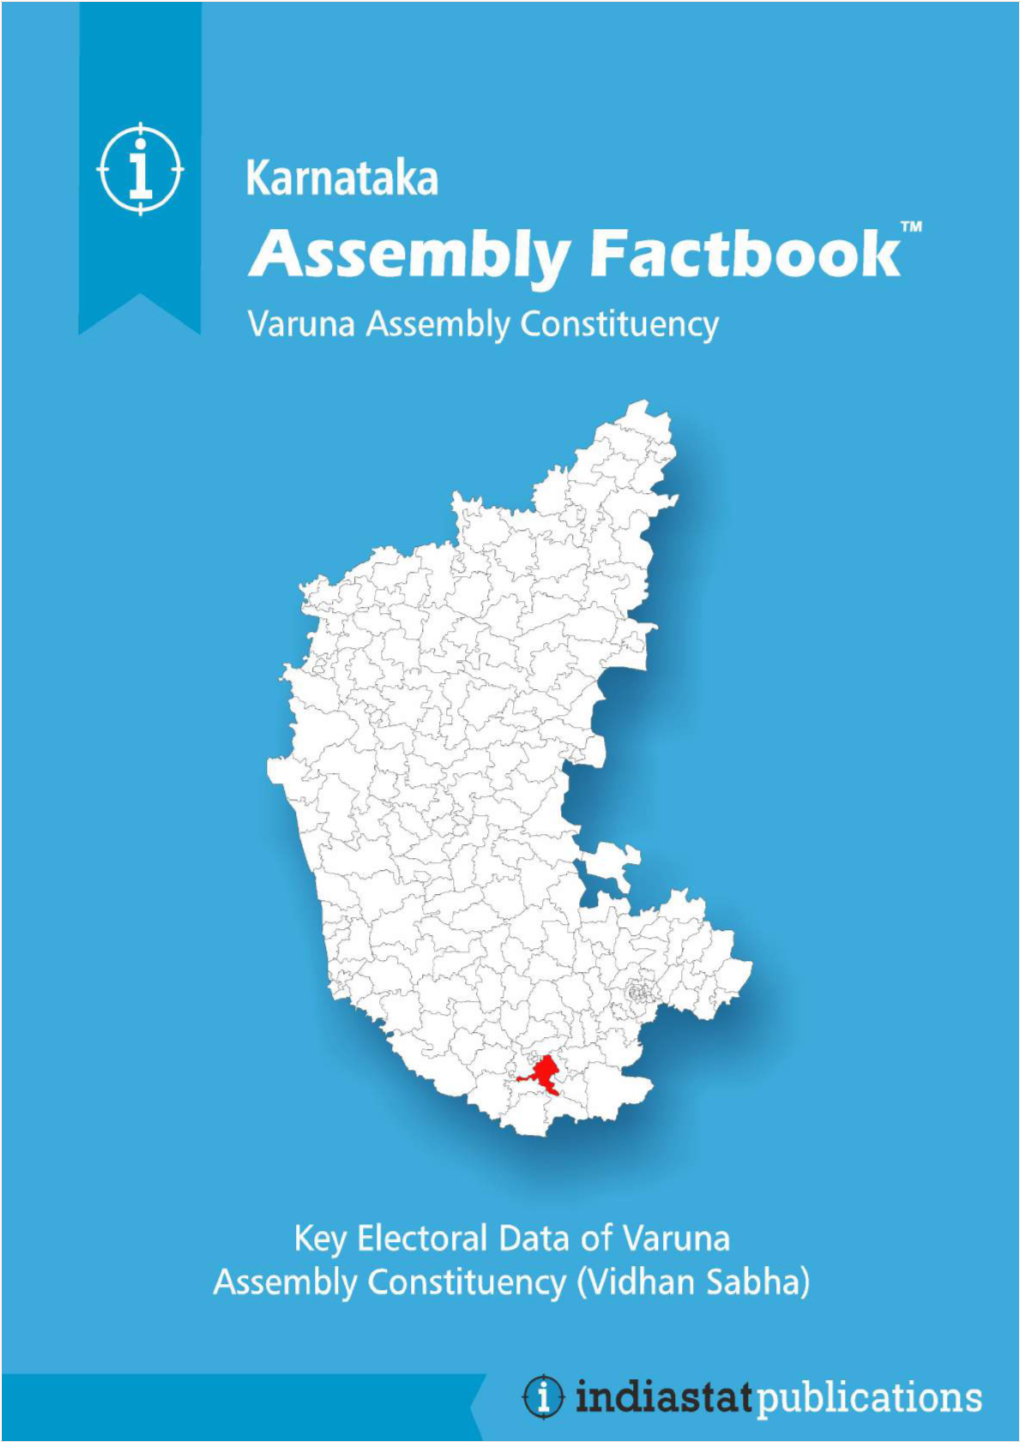 Varuna Assembly Karnataka Factbook